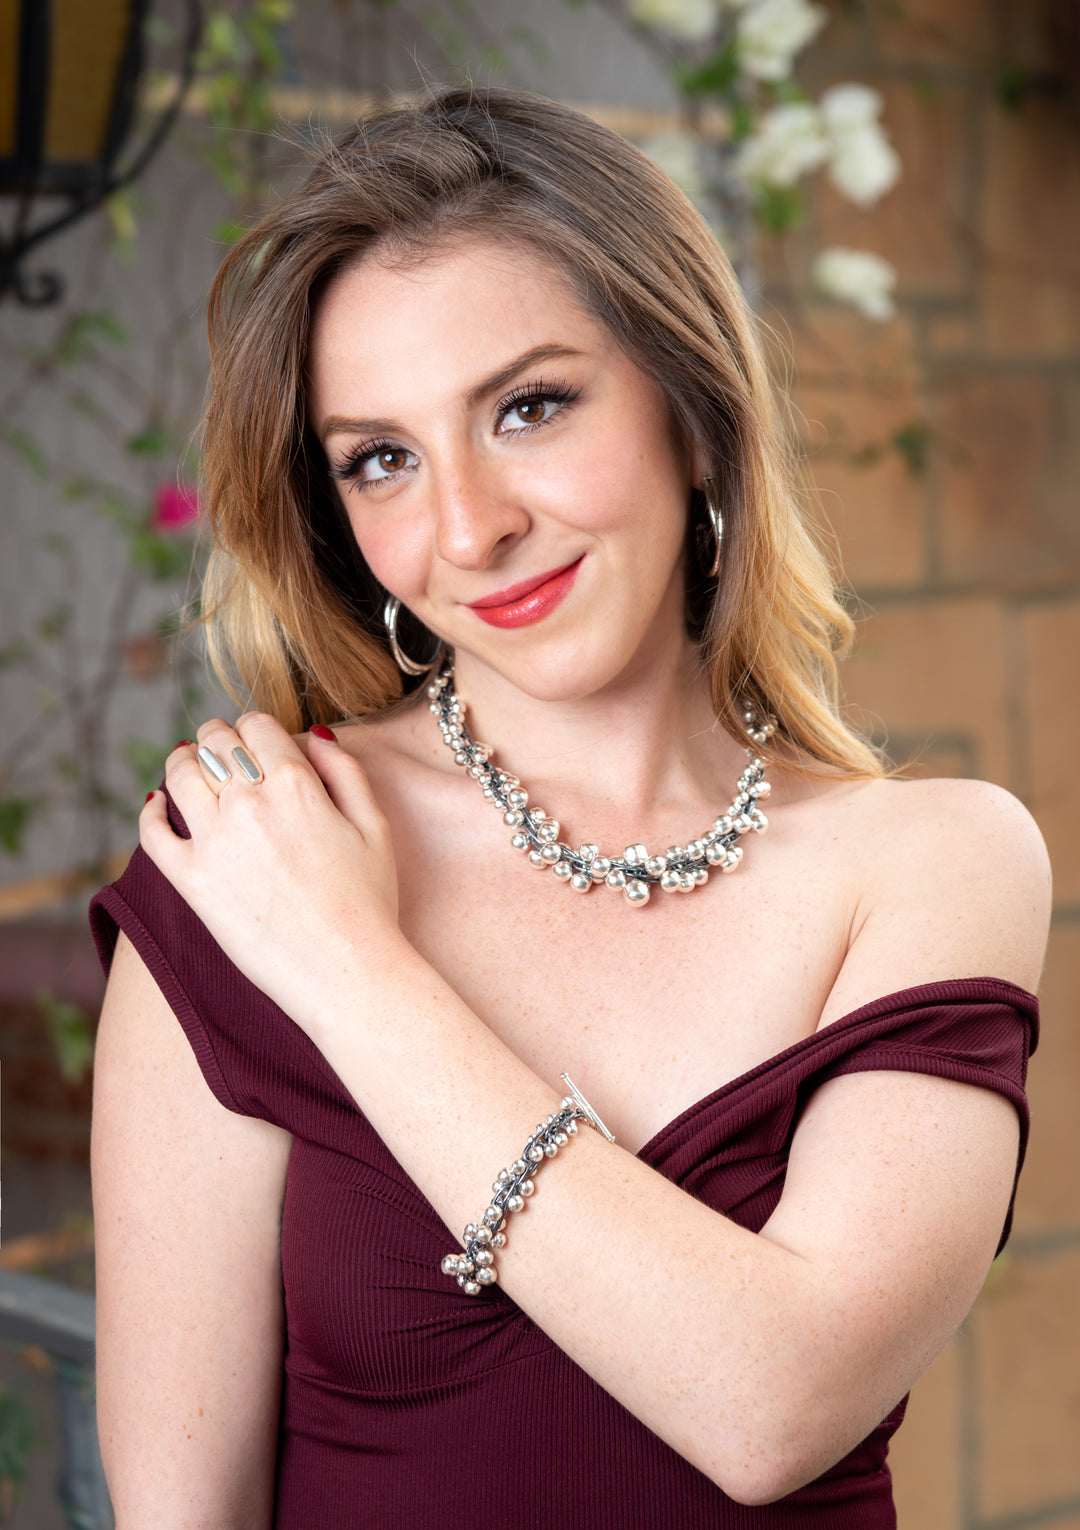 Oxidized and Shiny Silver Necklace and Bracelet Set on Model